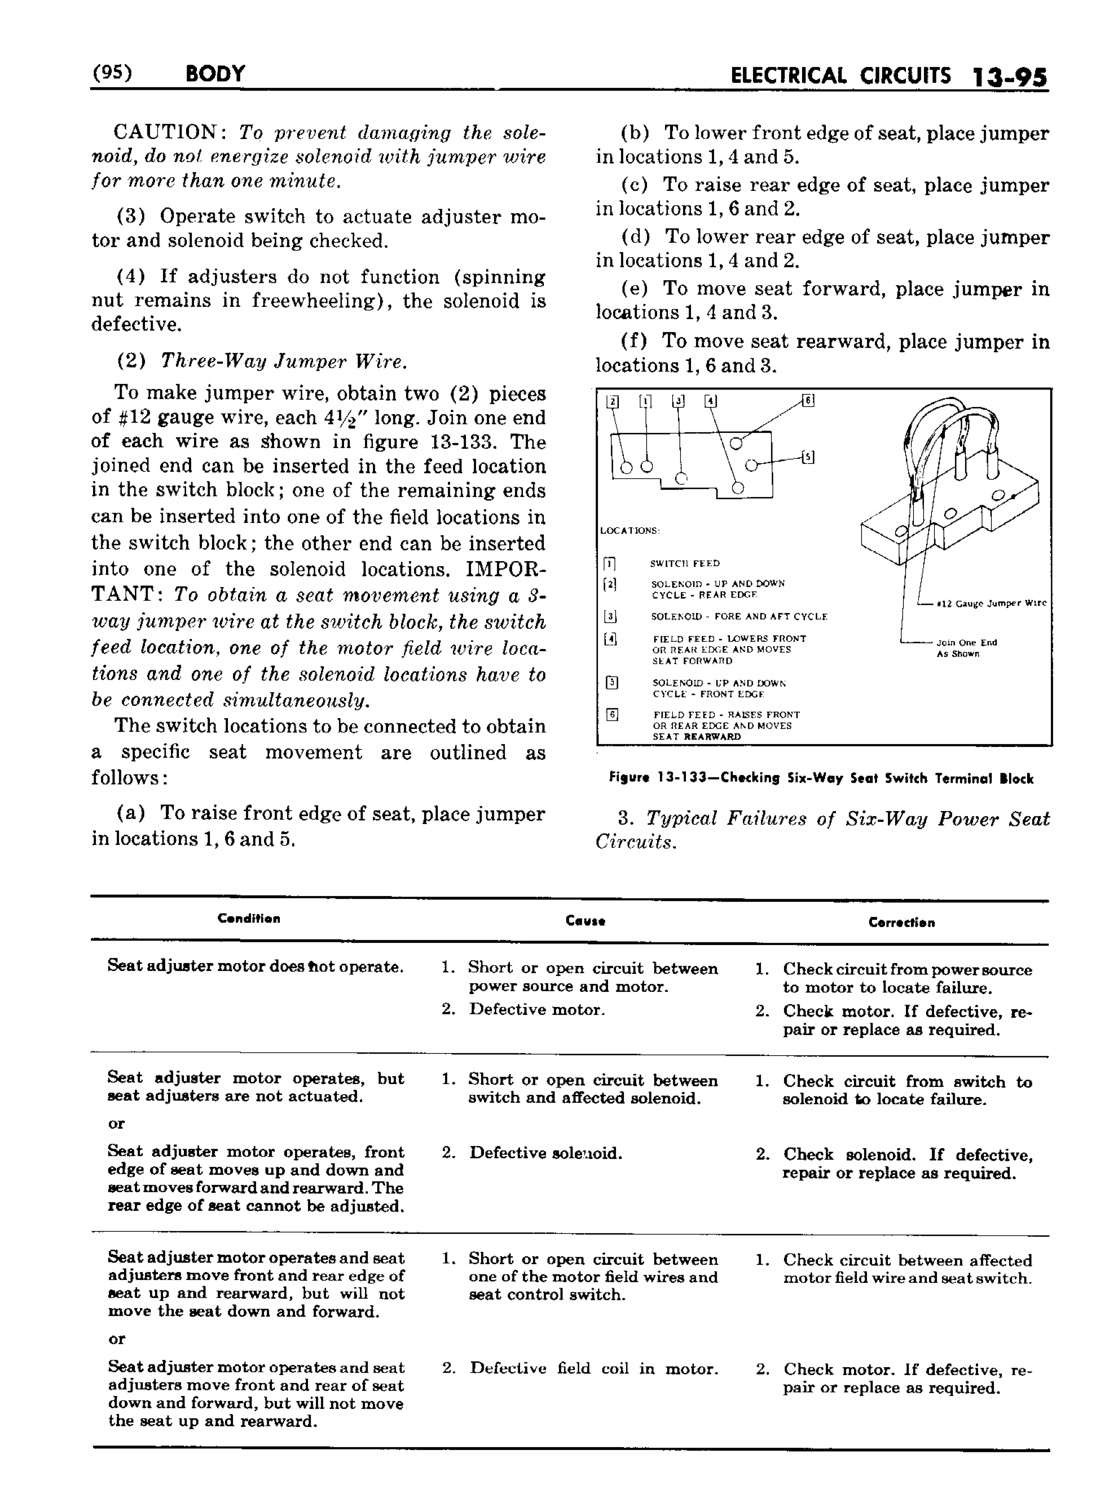 n_1958 Buick Body Service Manual-096-096.jpg